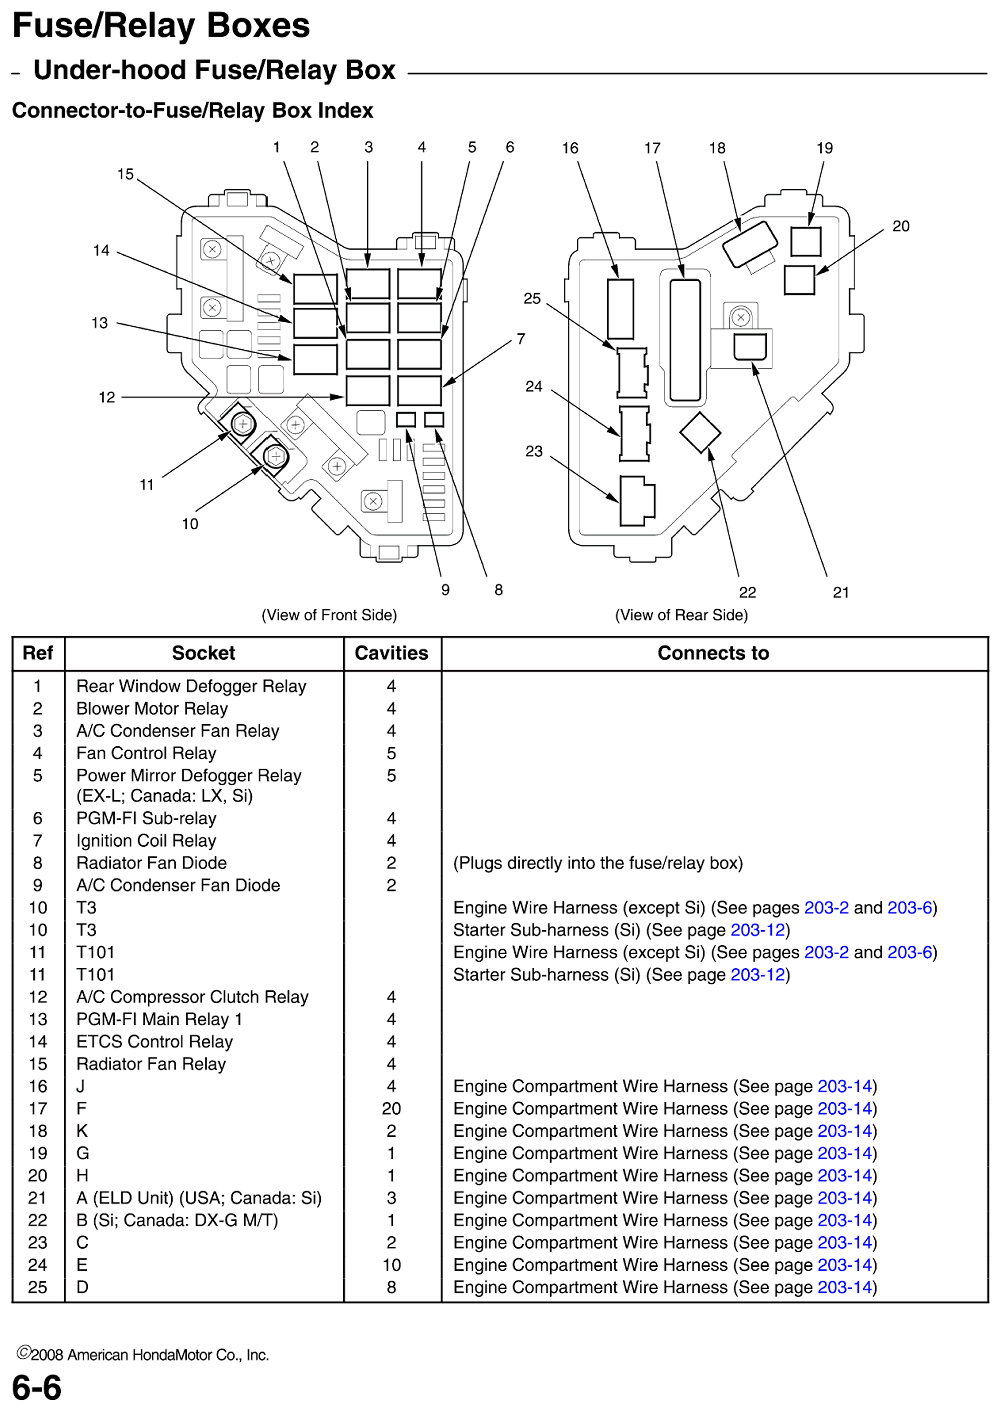 2008 Honda Civic Fuse Box Diagram Repair Guides Fuserelay Boxes 2008 Fuserelay Boxes 2008 1